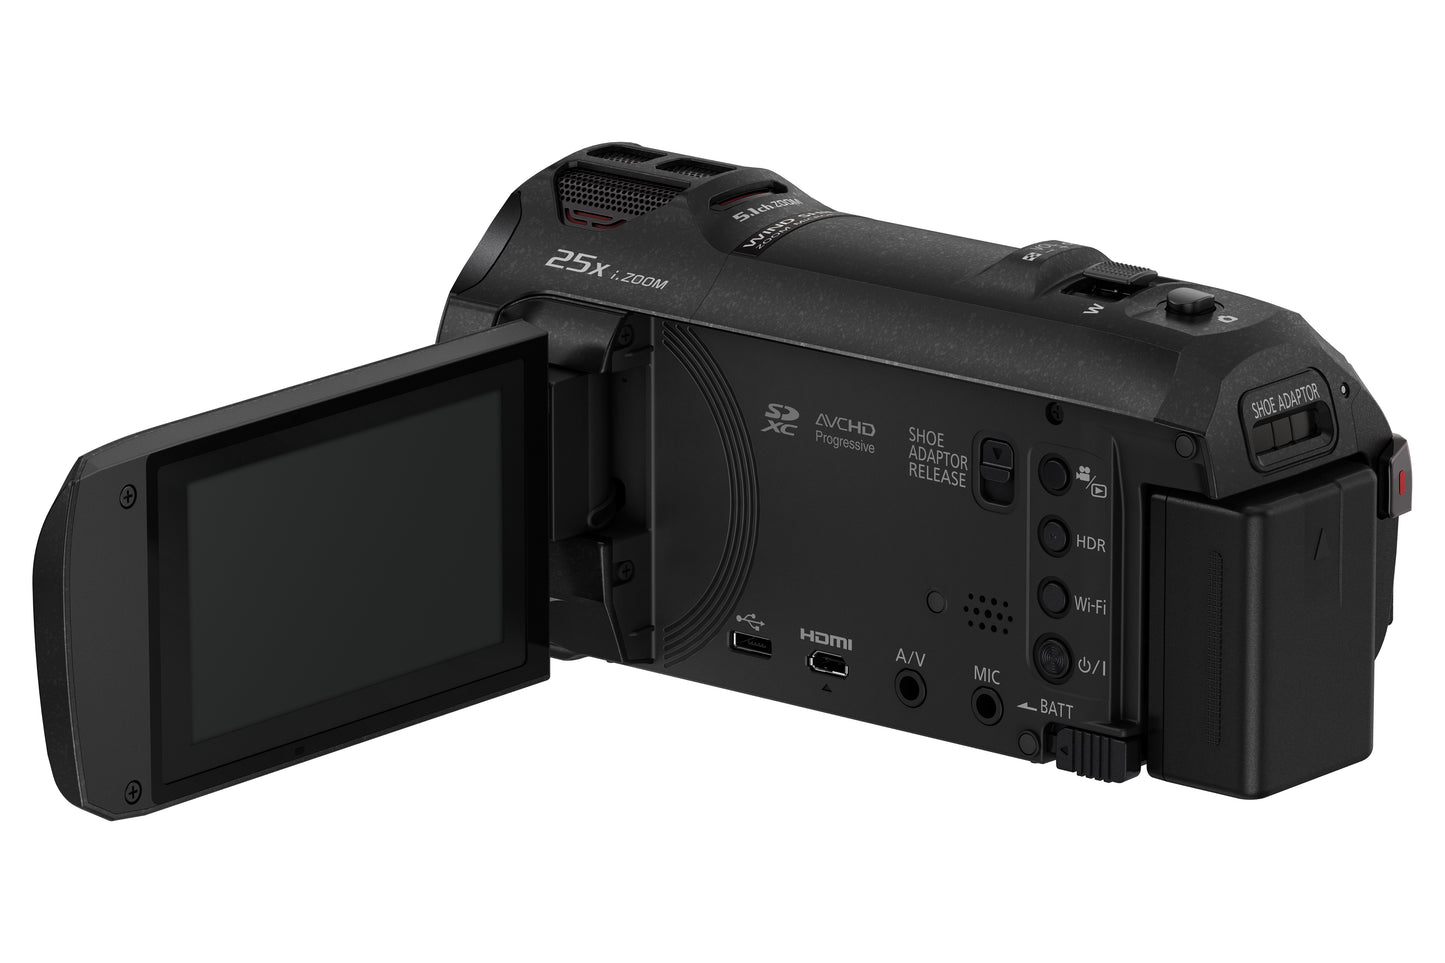 Panasonic HC-VX980 4K Camcorder with 20x Optical Zoom, 3" LCD, WiFi & SD/SDHC/SDXC Compatibility - Black